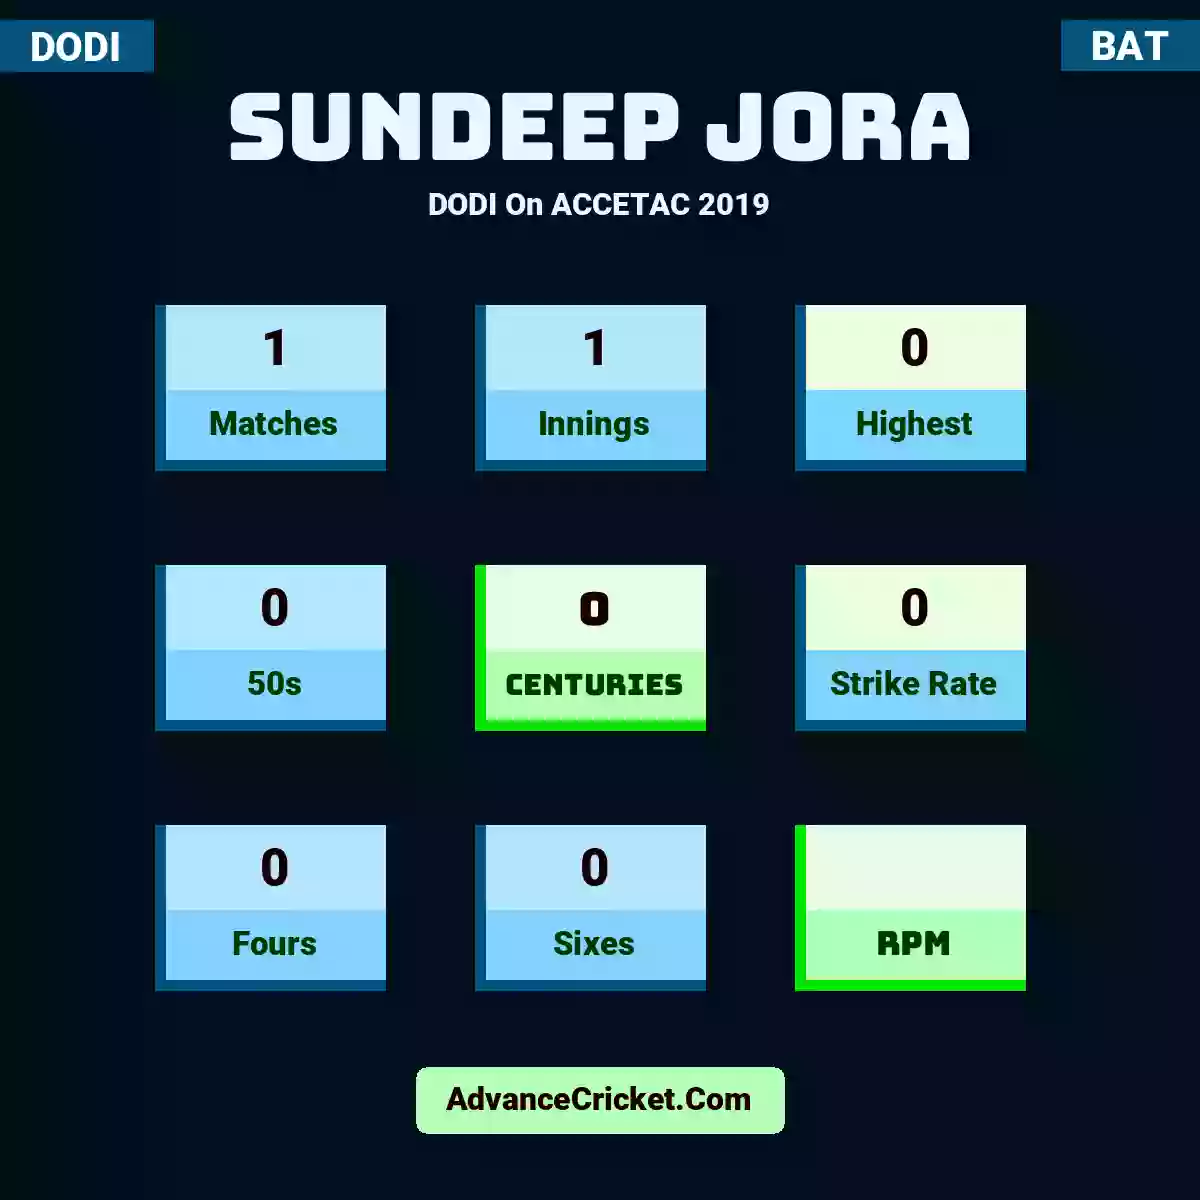 Sundeep Jora DODI  On ACCETAC 2019, Sundeep Jora played 1 matches, scored 0 runs as highest, 0 half-centuries, and 0 centuries, with a strike rate of 0. S.Jora hit 0 fours and 0 sixes.